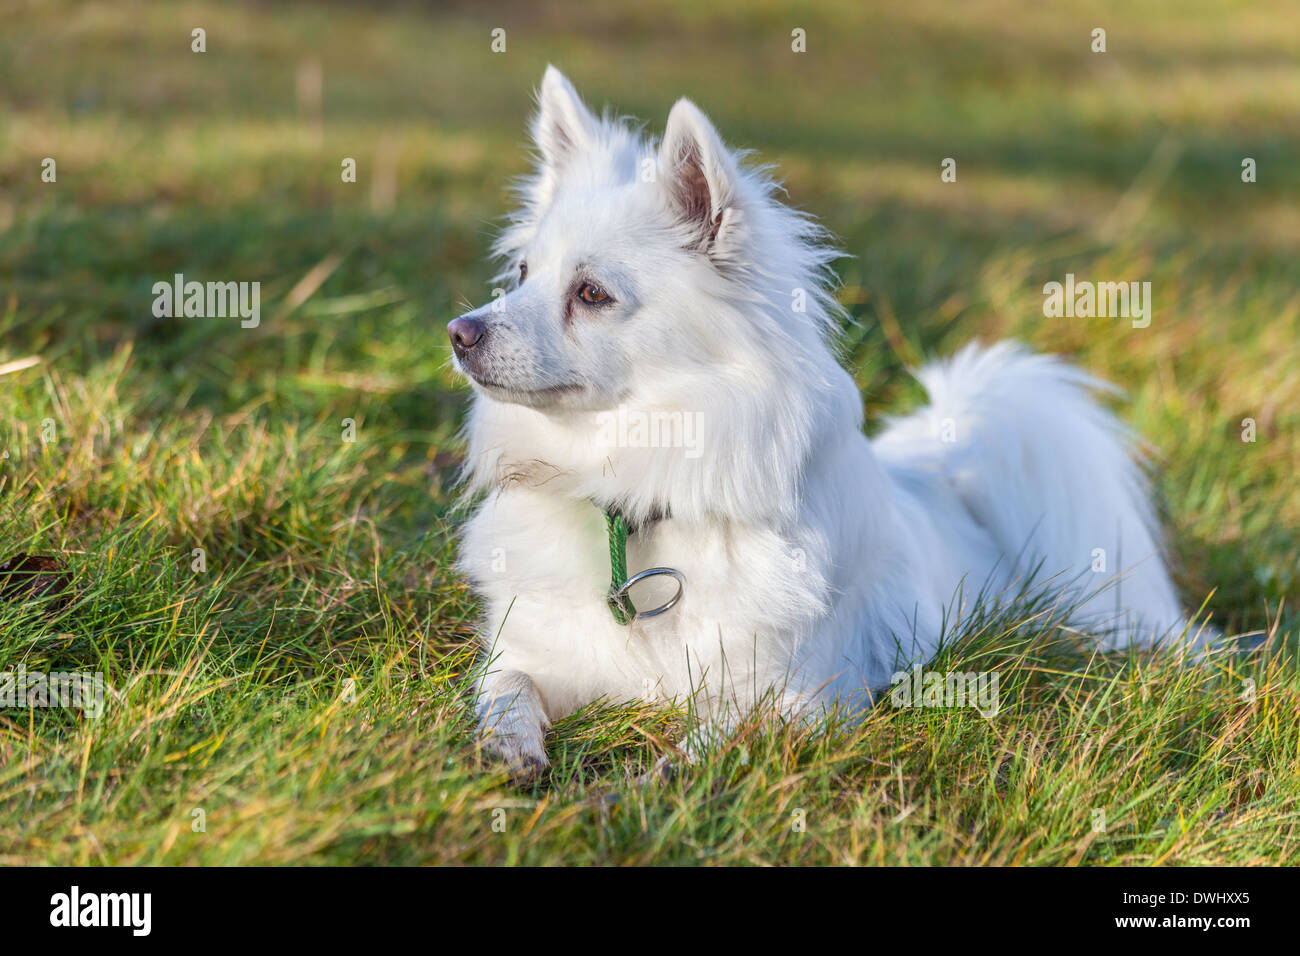 White Pomeranian dog lying on grass field Stock Photo